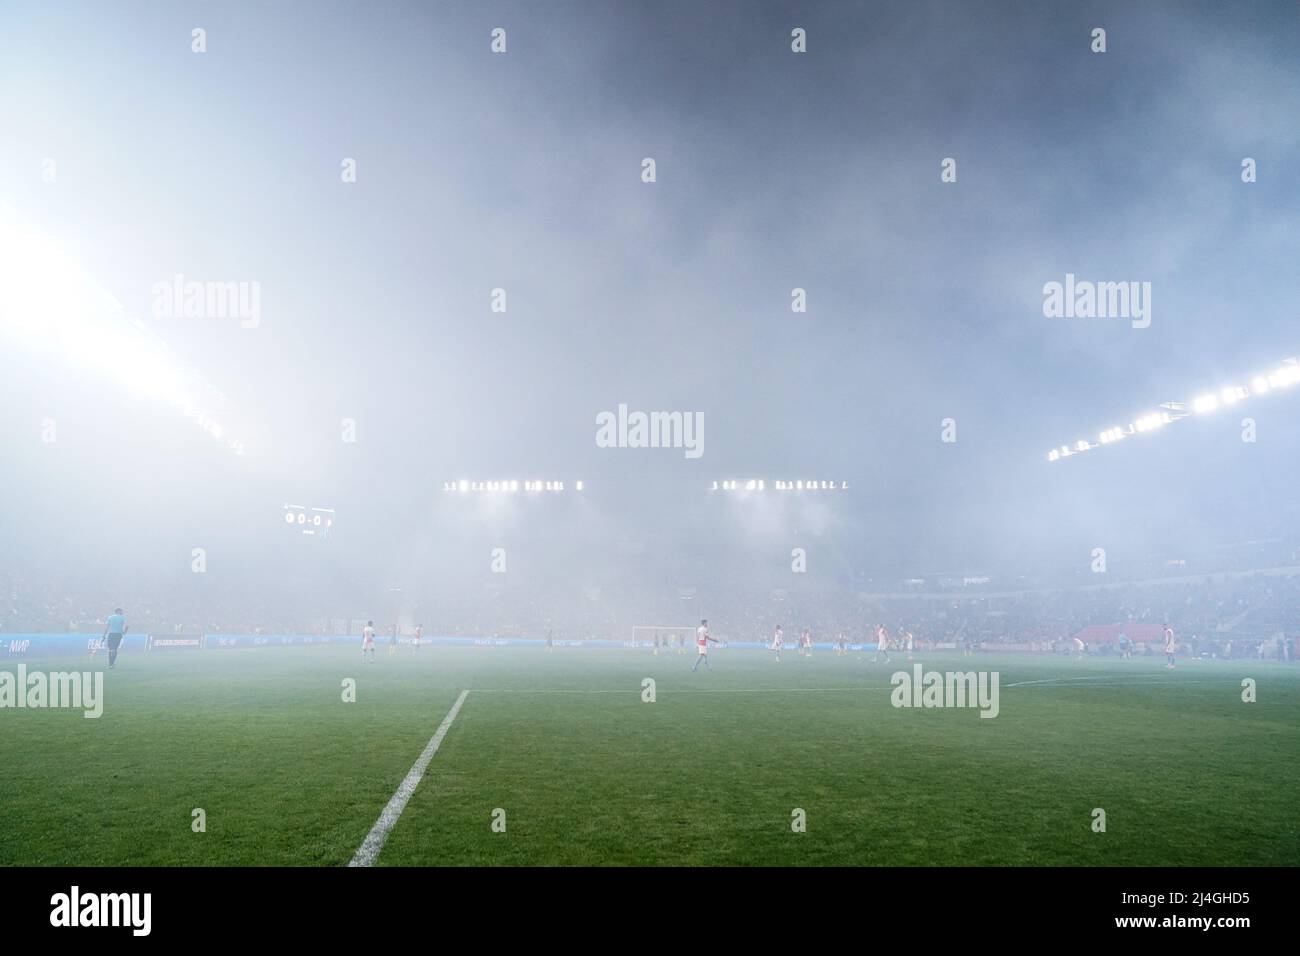 Sk slavia prague stadium hi-res stock photography and images - Alamy